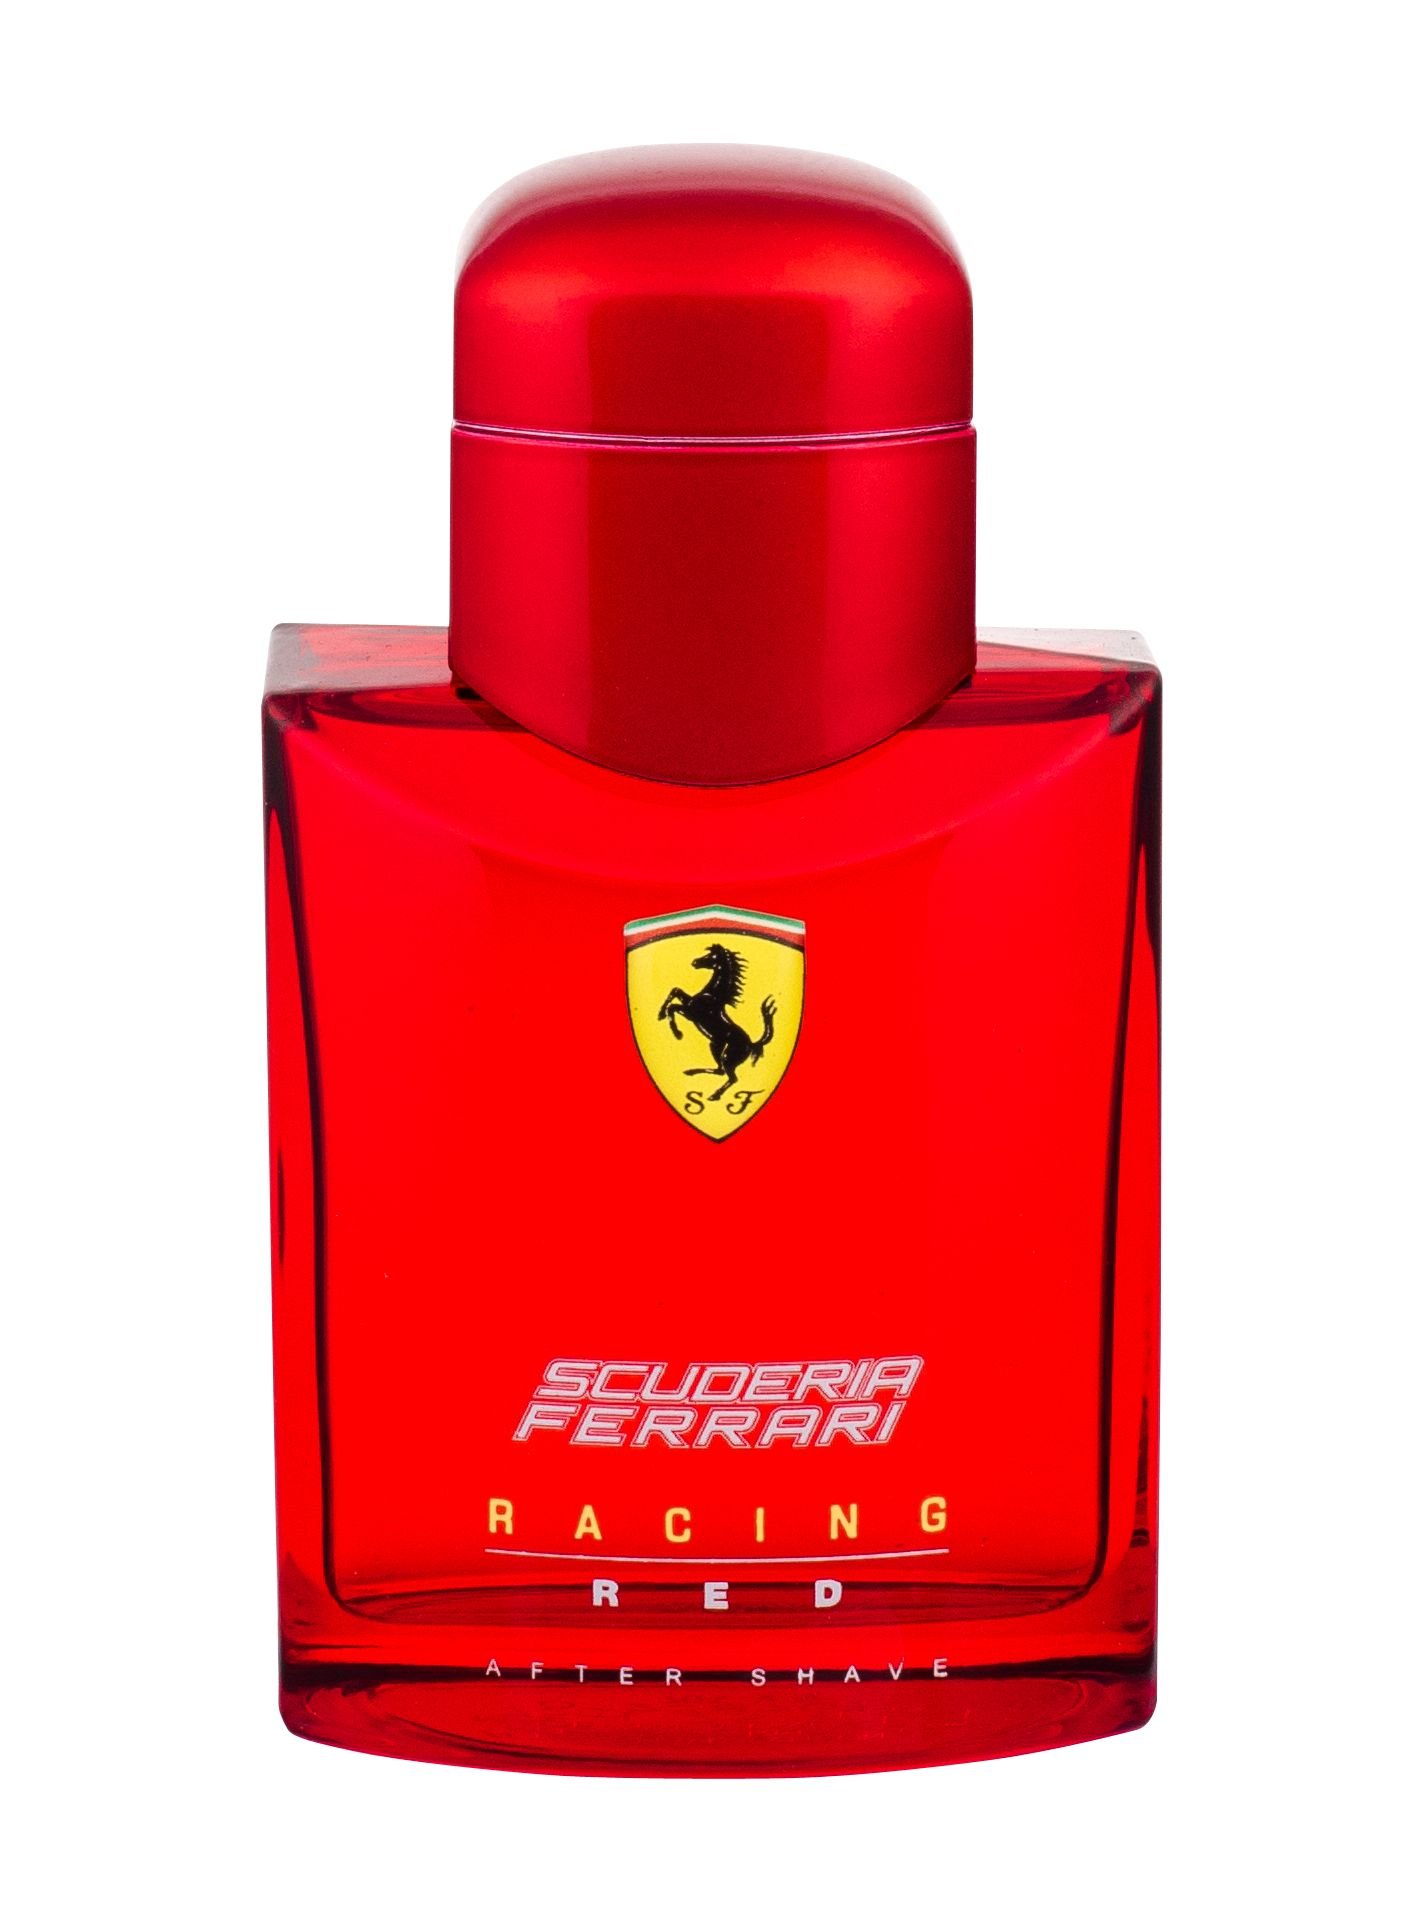 Ferrari Scuderia Ferrari Racing Red 75ml vanduo po skutimosi